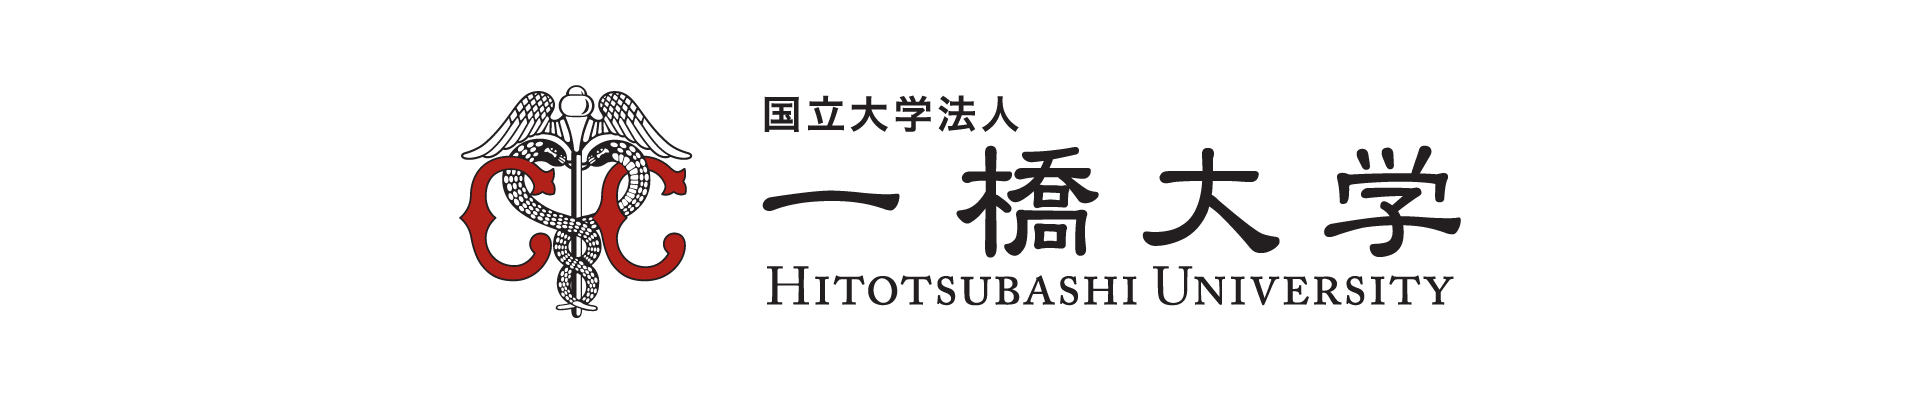 Hitotsubashi University - Global Leaders Program - Logo